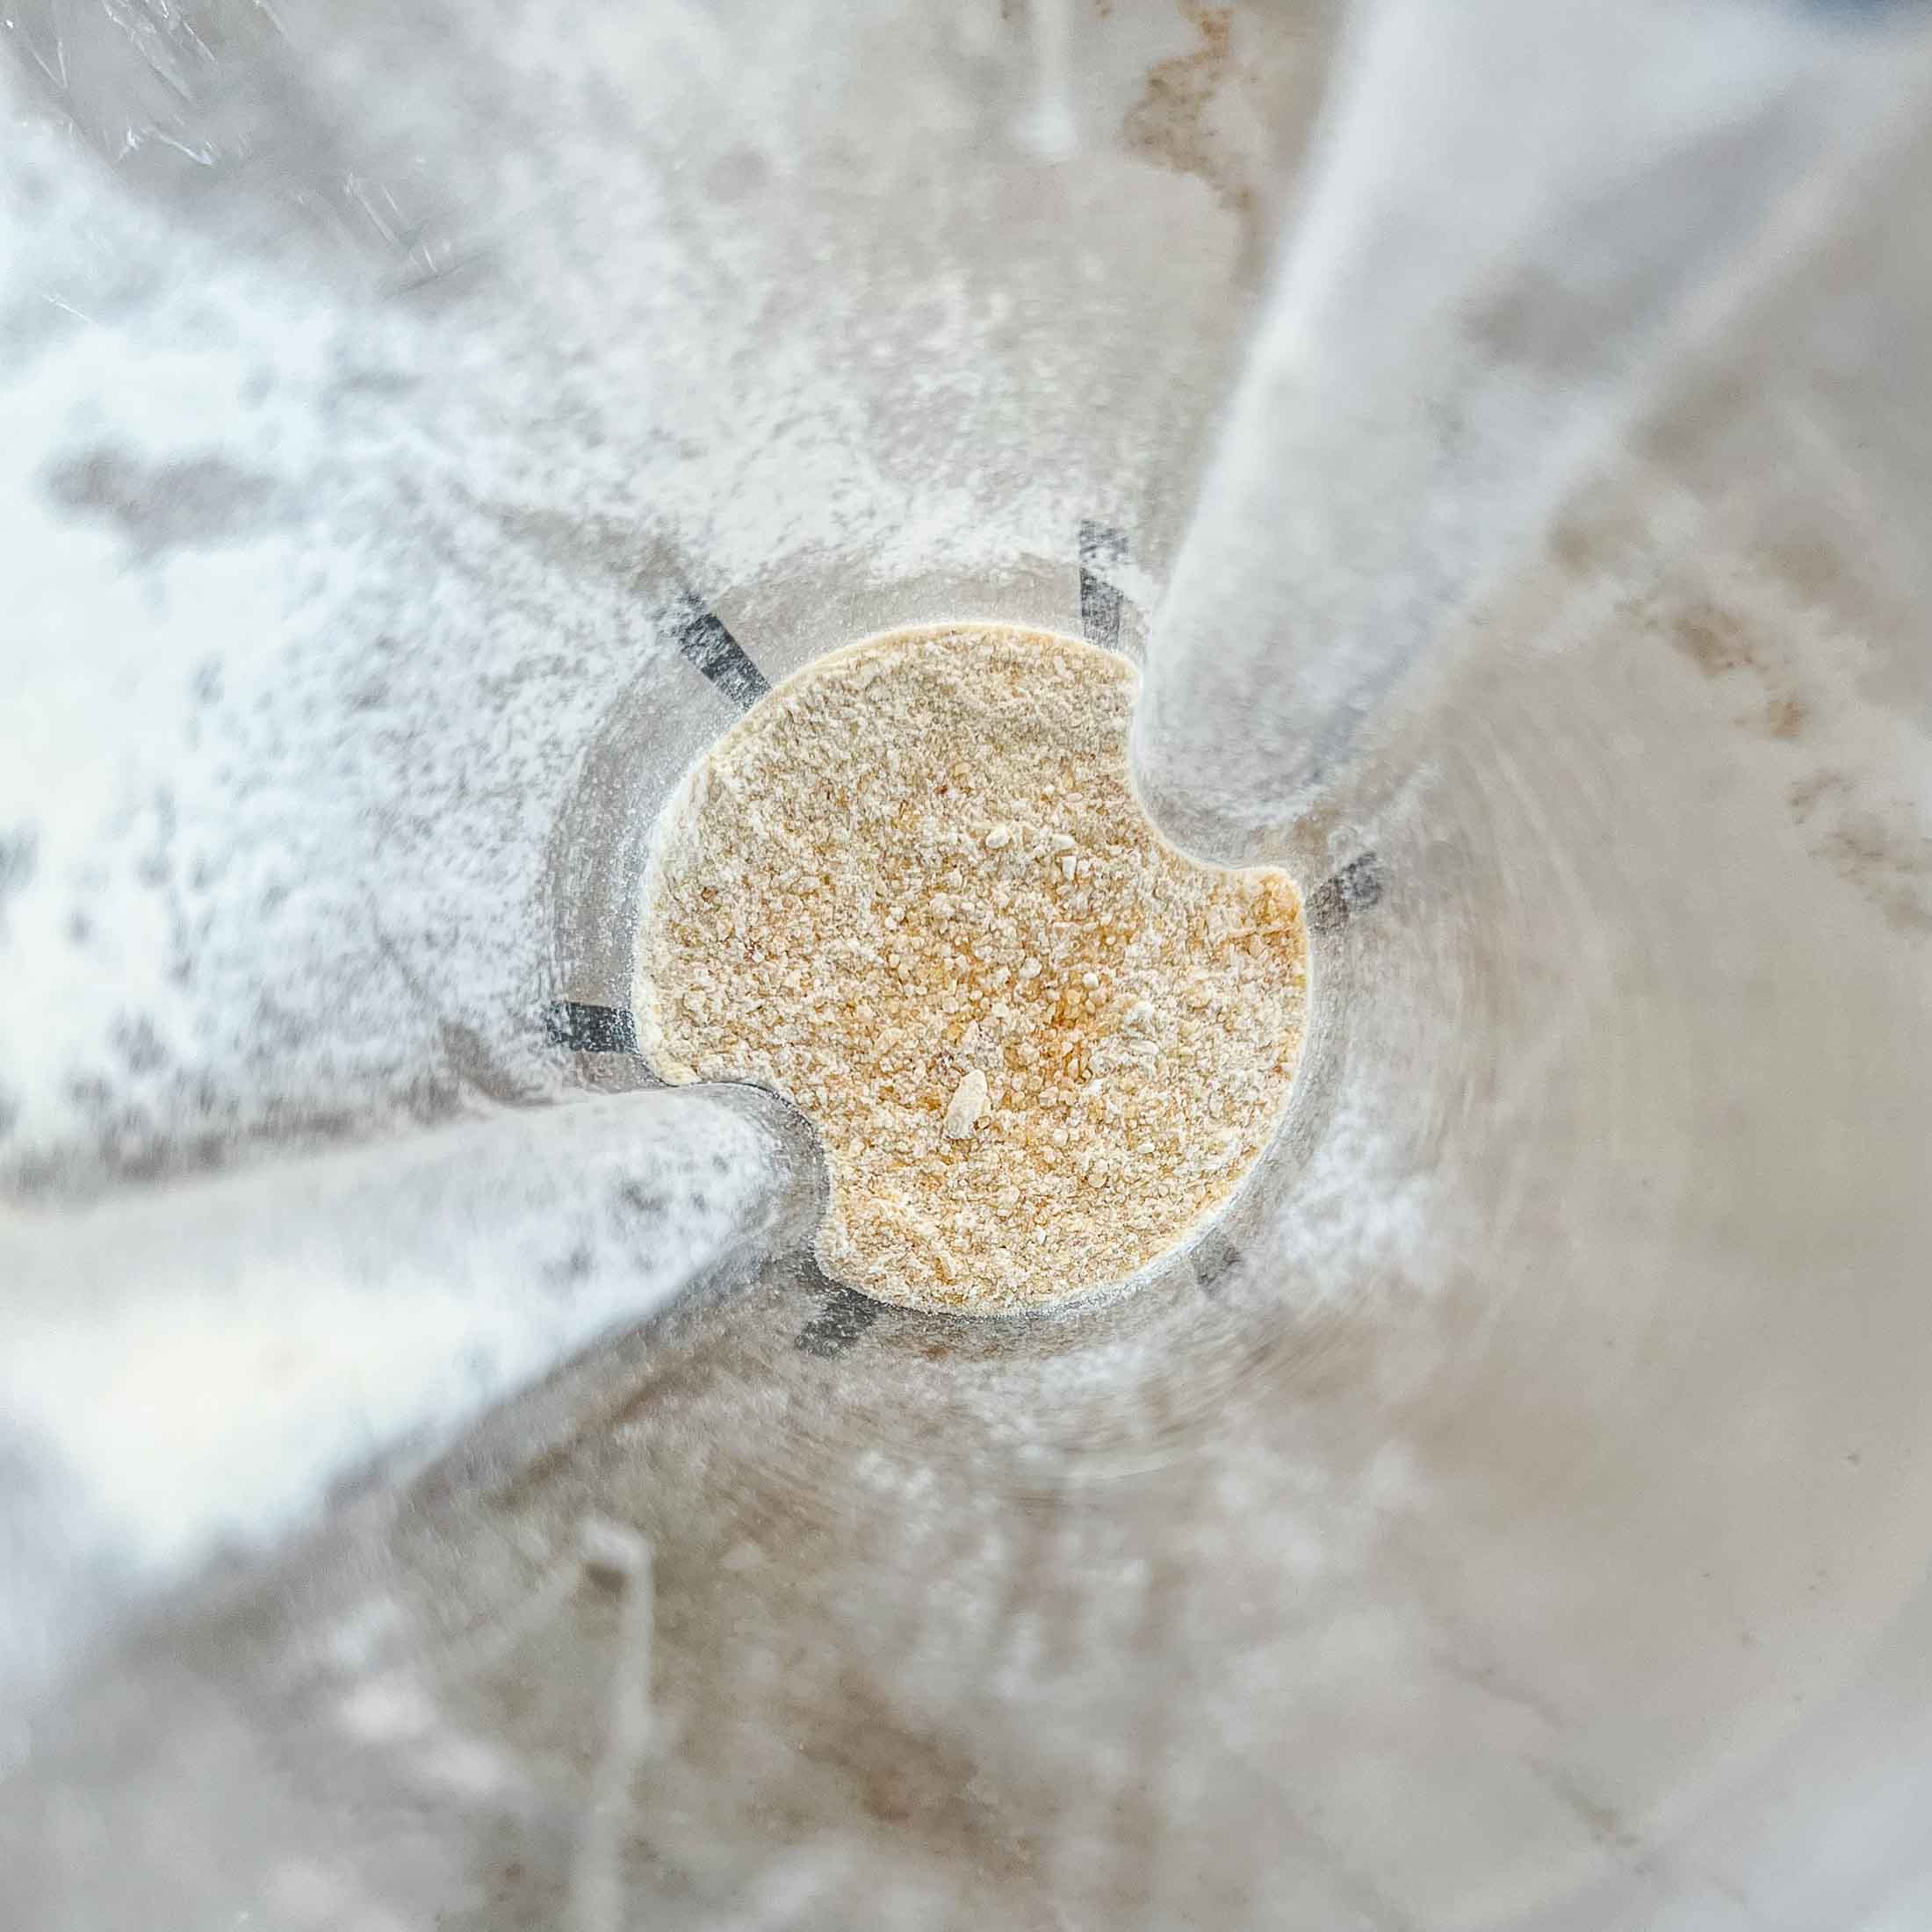 Garlic powder in a vitamix container.